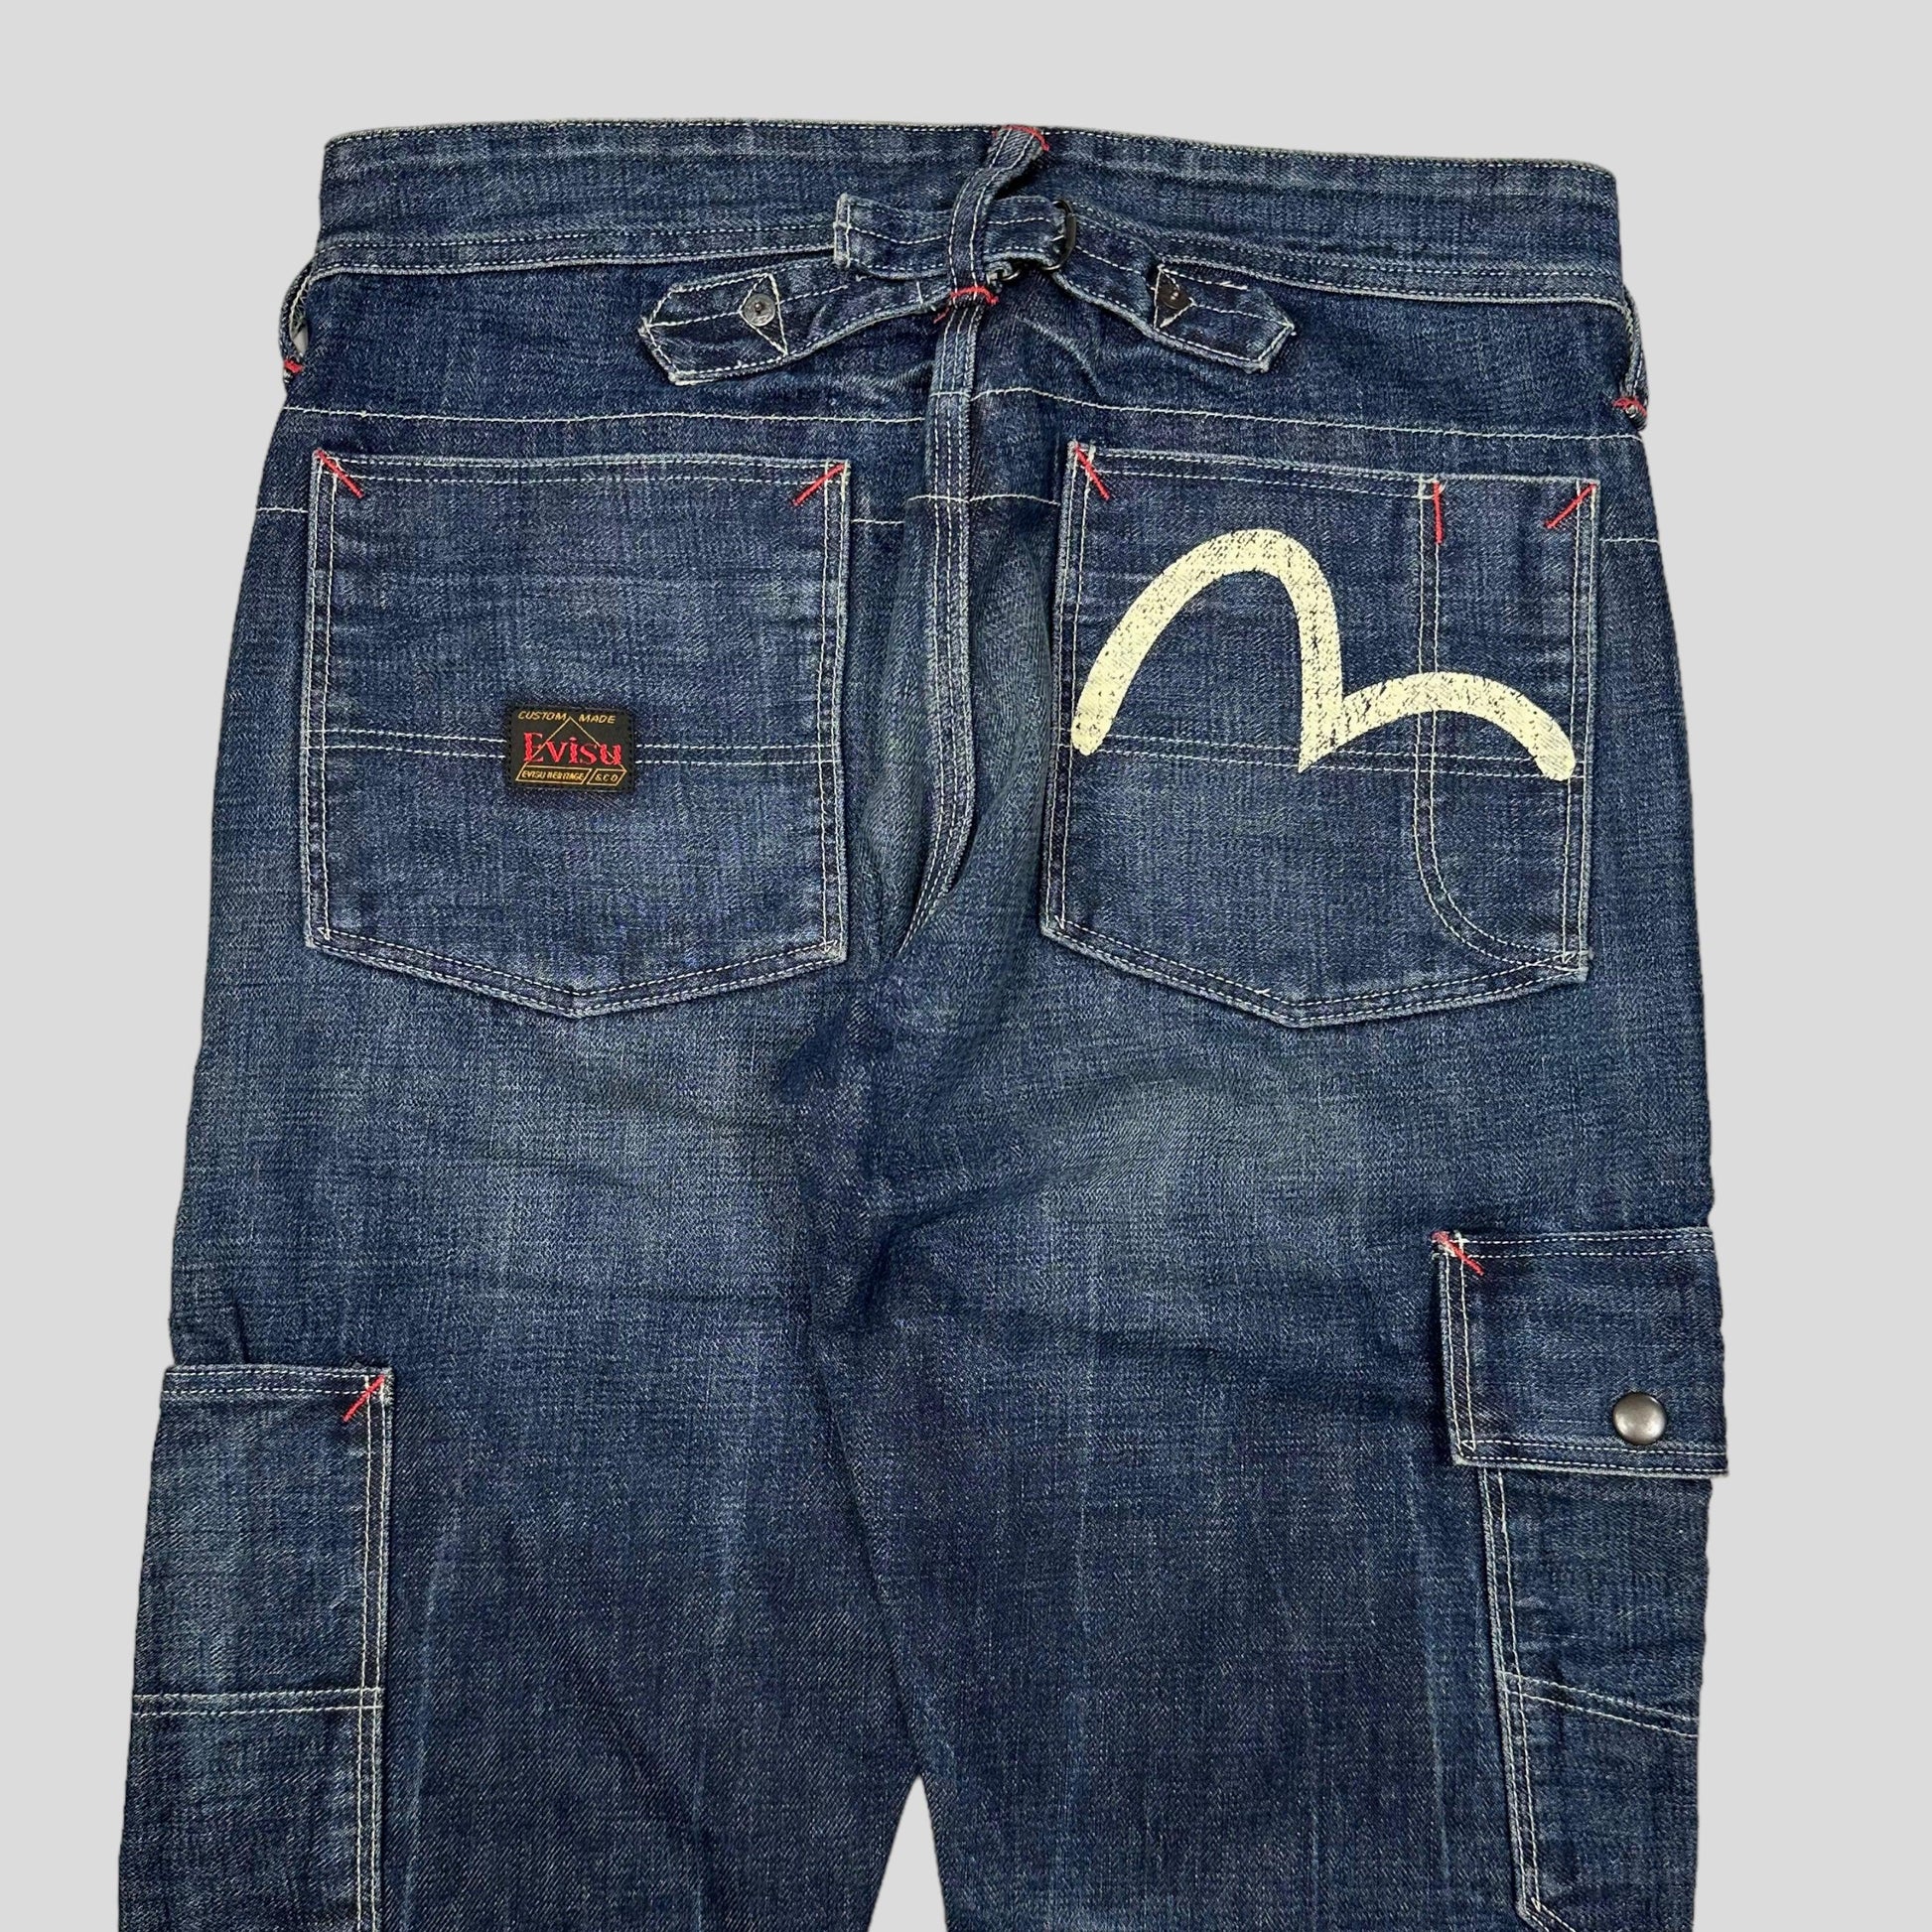 Evisu 00’s Denim Carpenter Jeans - 30-31 - Known Source